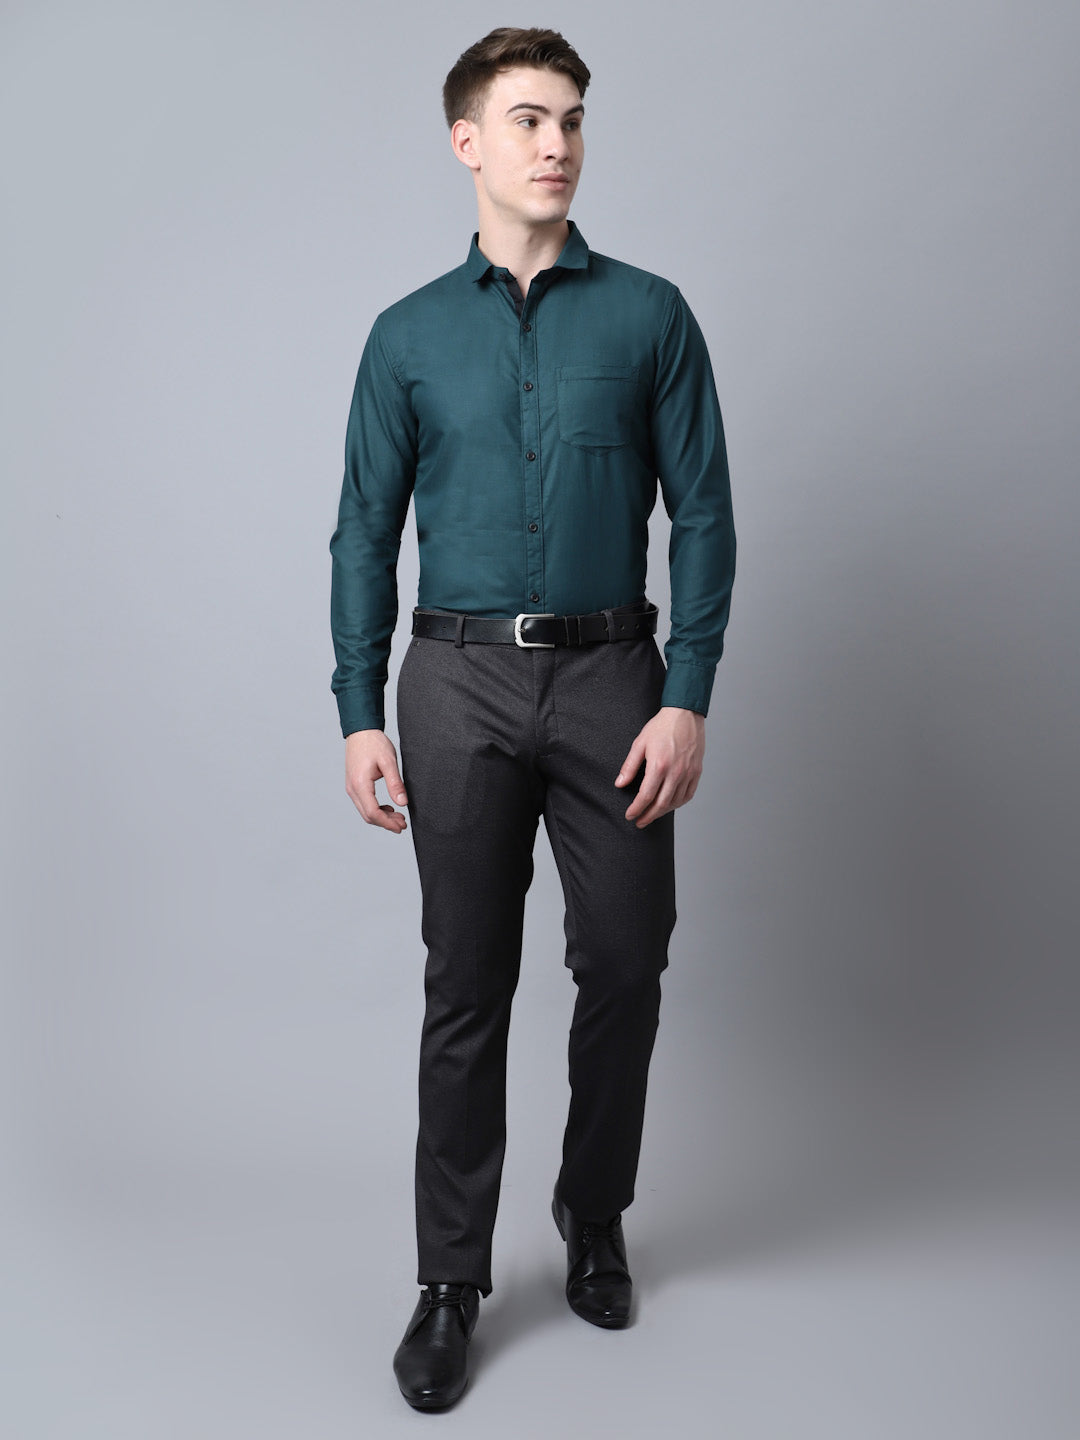 Majestic Man Versatile Solid Formal Shirt - Dark Green